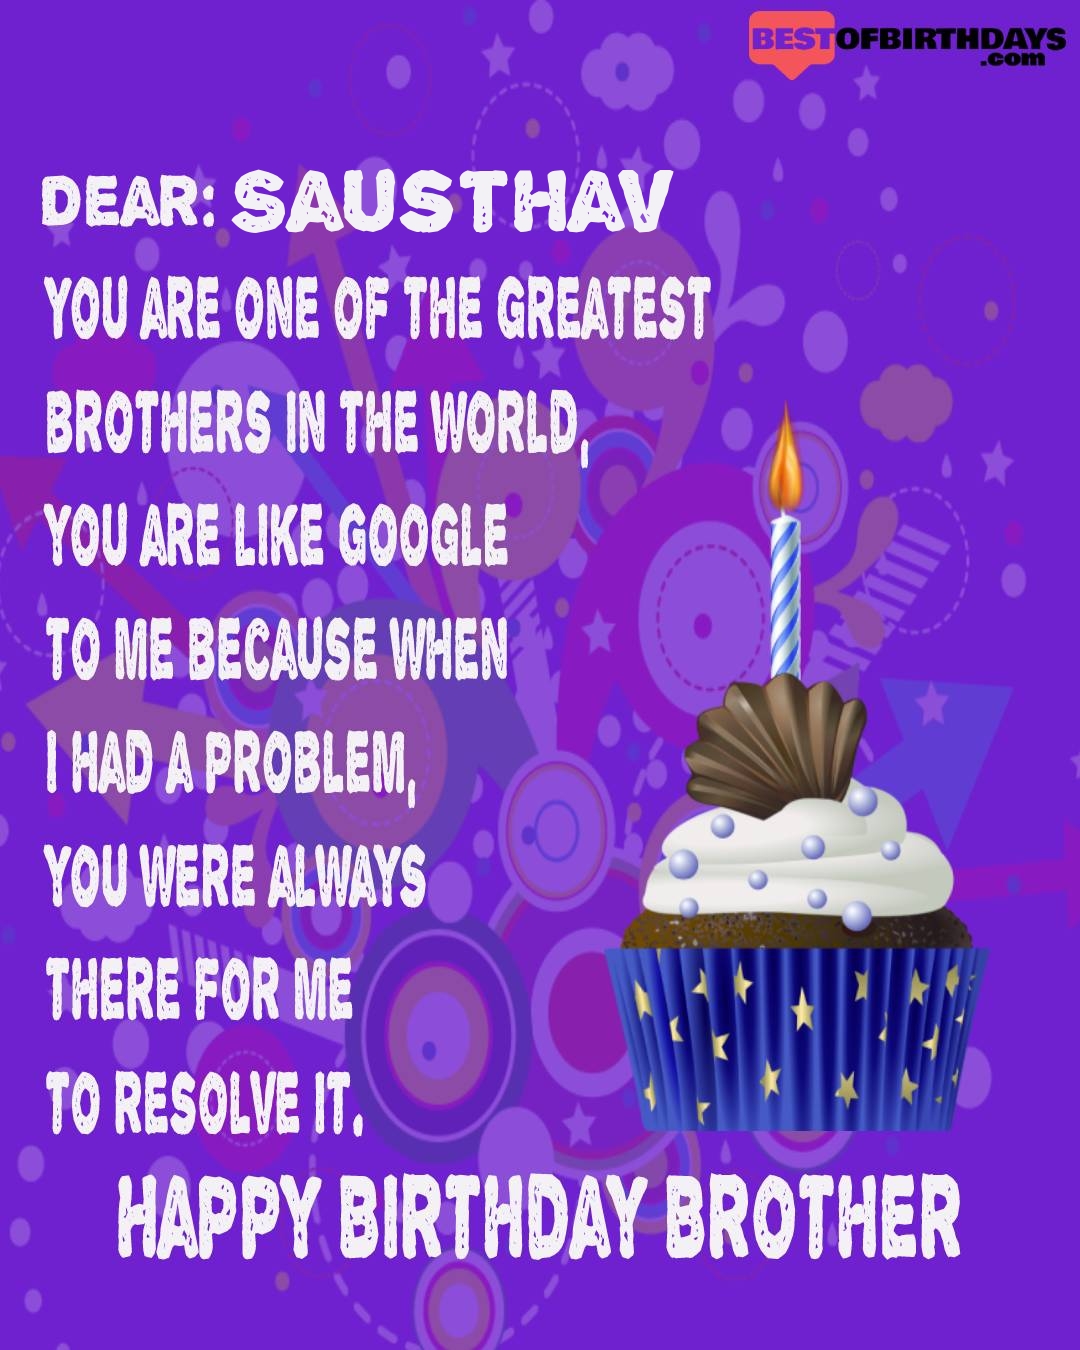 Happy birthday sausthav bhai brother bro